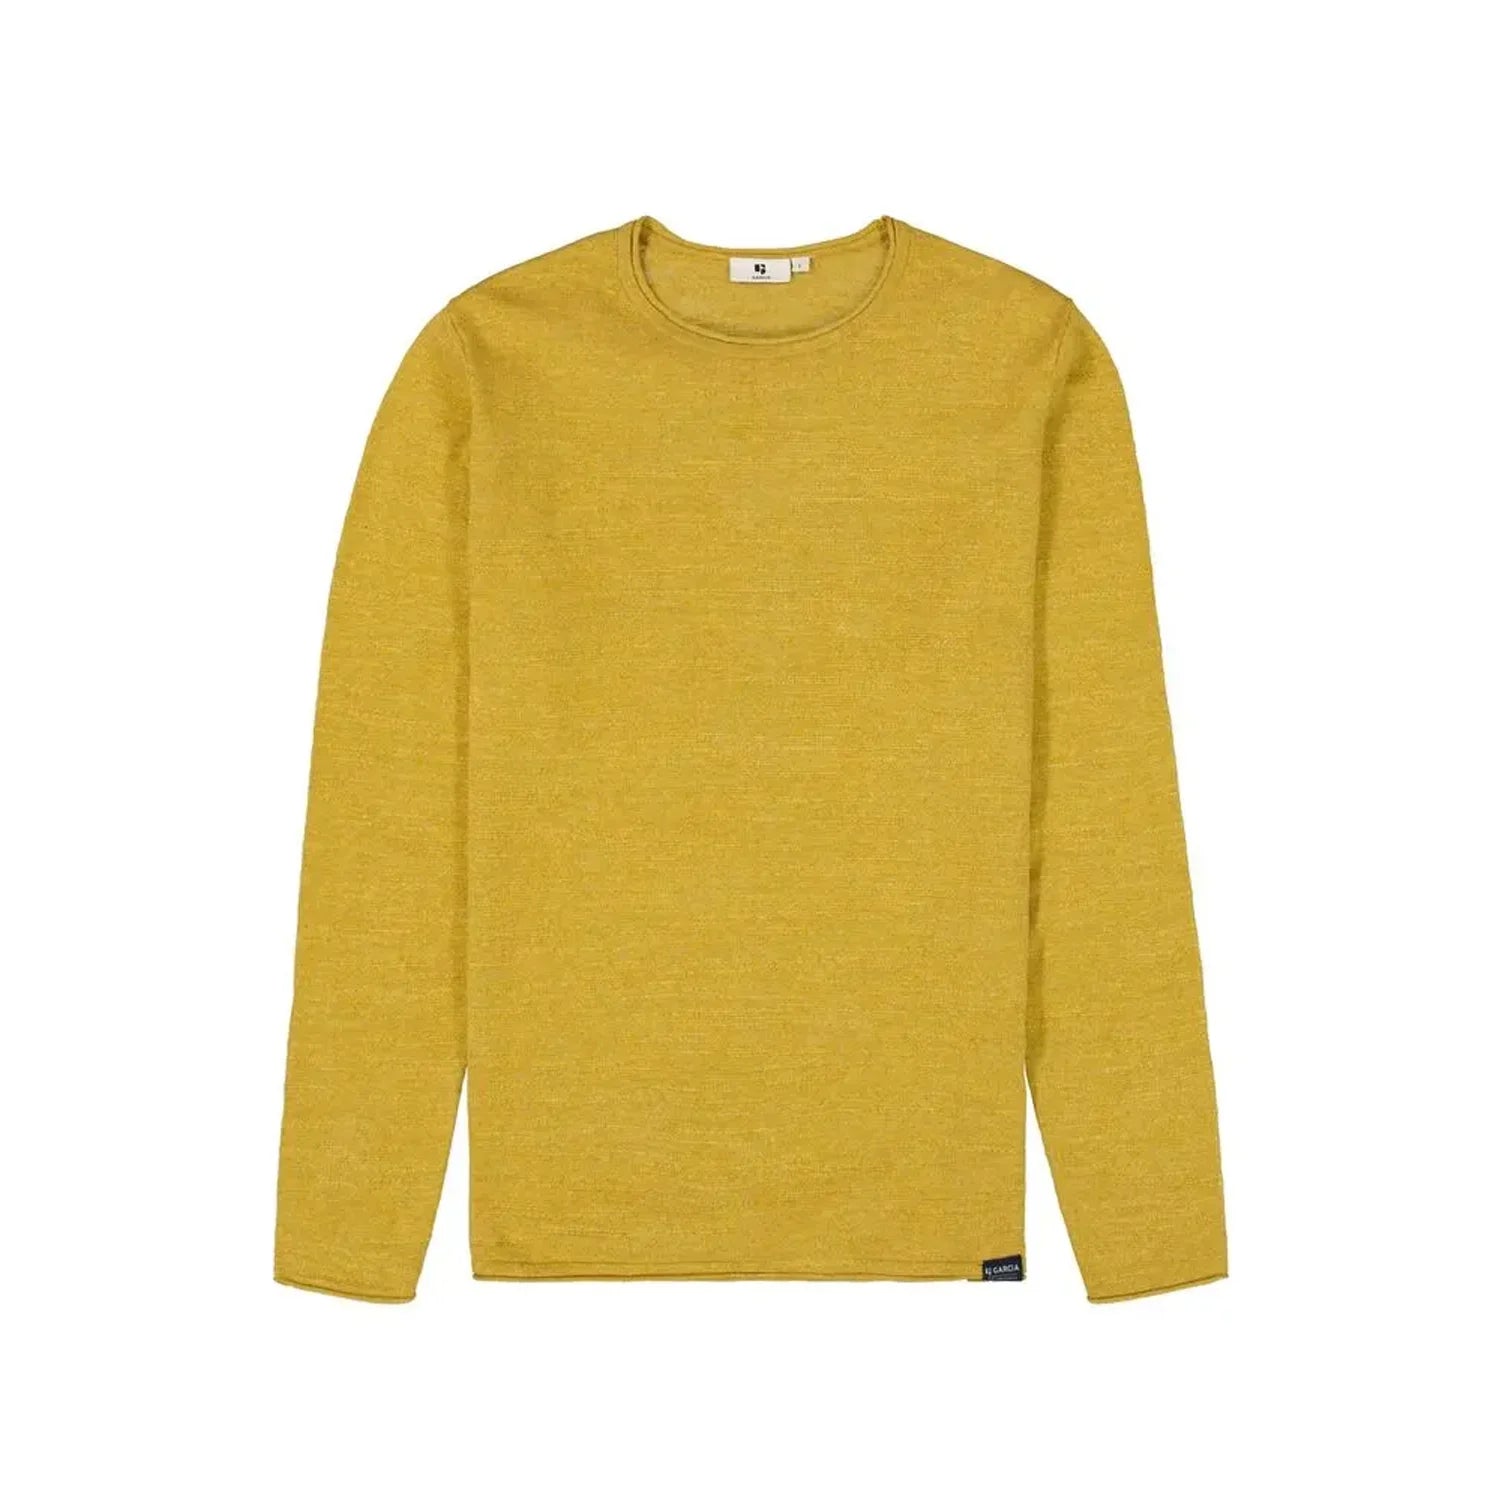 'Garcia Z1086 Knit Pullover Sweater' in 'Dandelion' colour